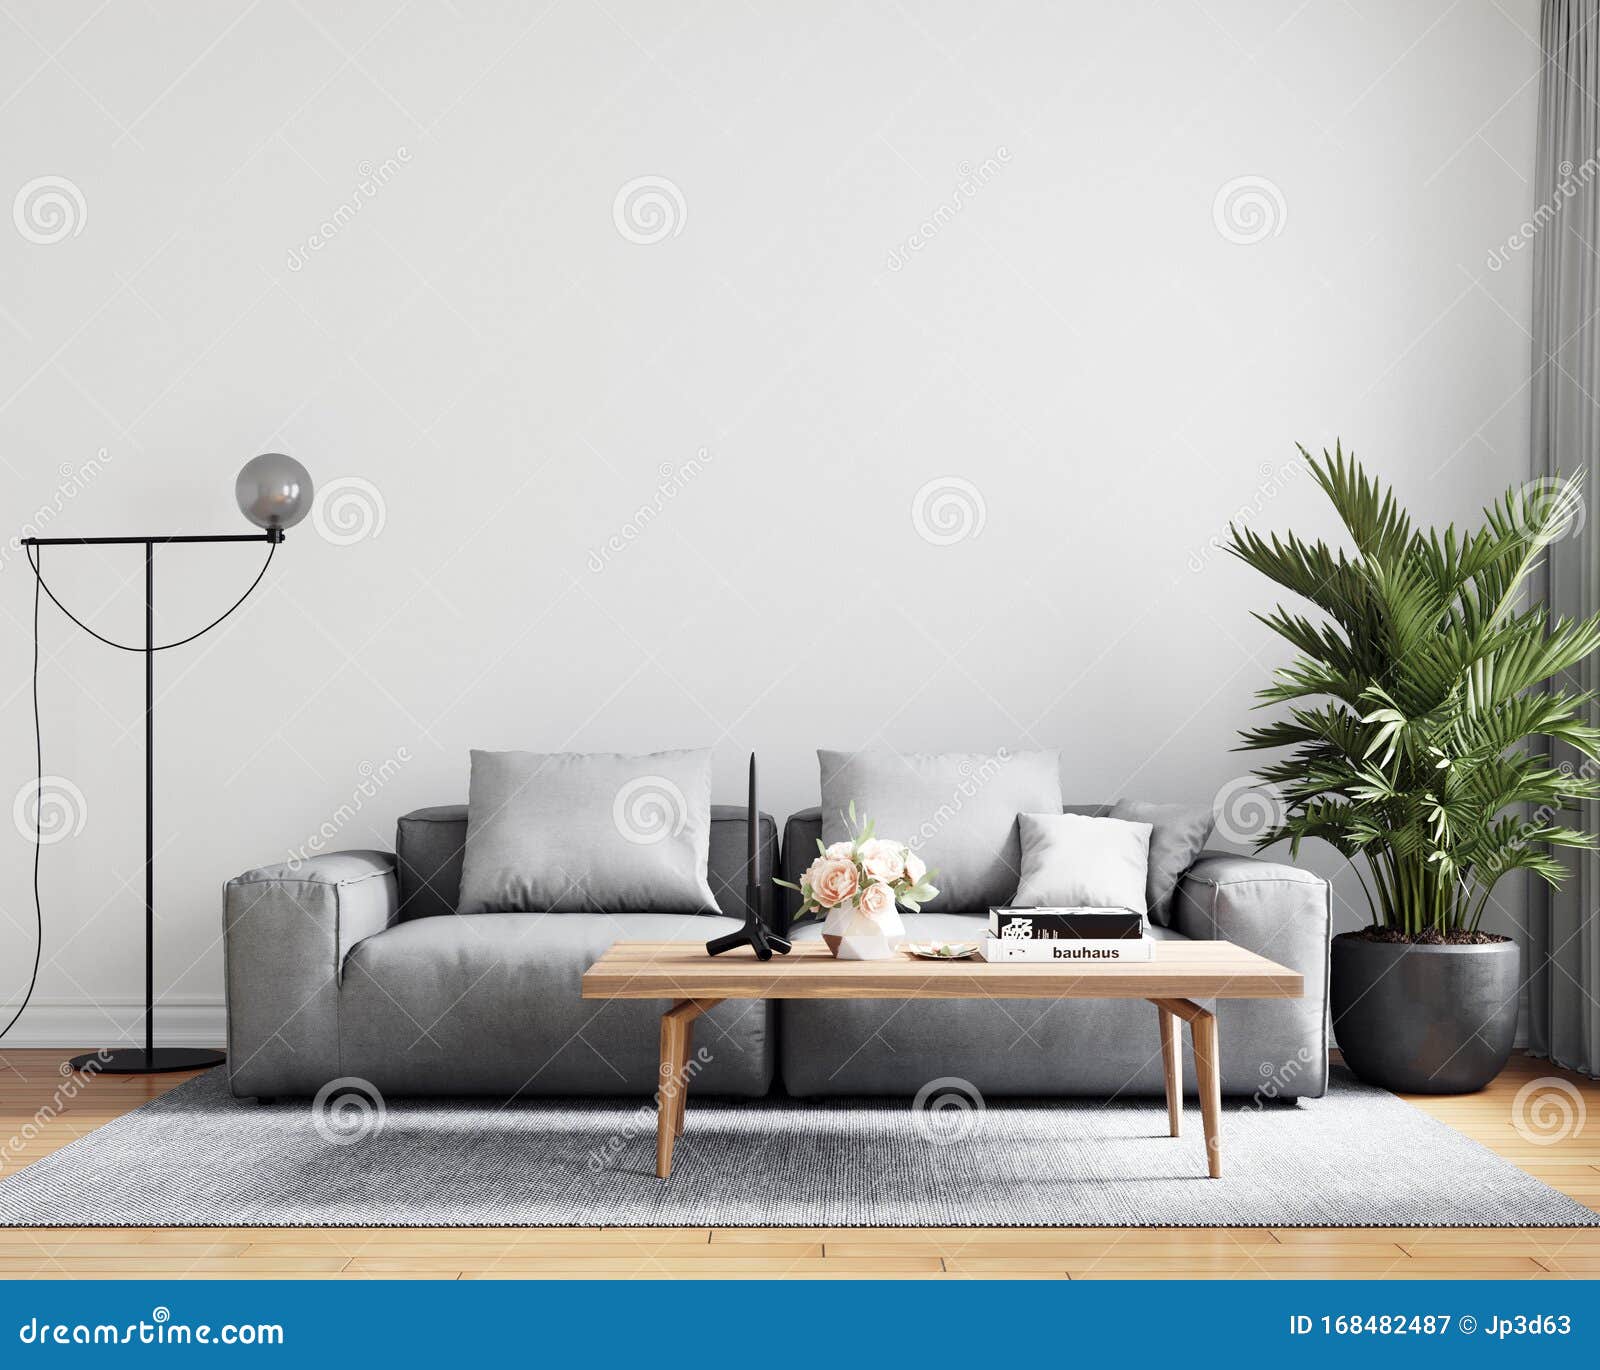 Interior Living Room Wall Mock Up Background Stock Image - Image of design,  wallpaper: 168482487